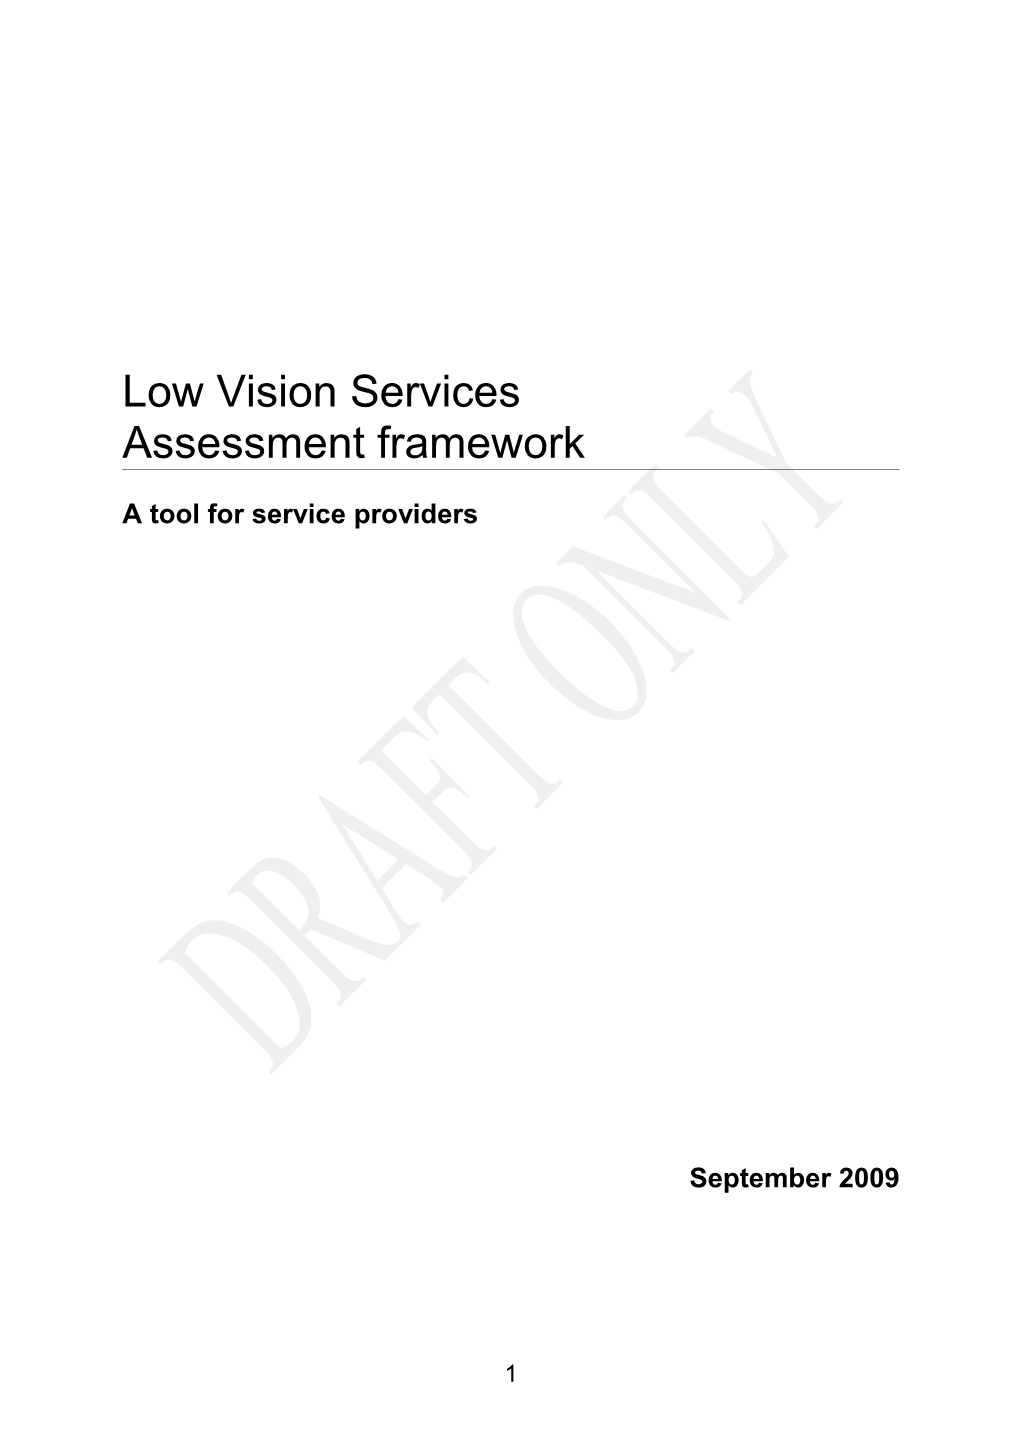 Low Vision Services Draft Assessment Framework